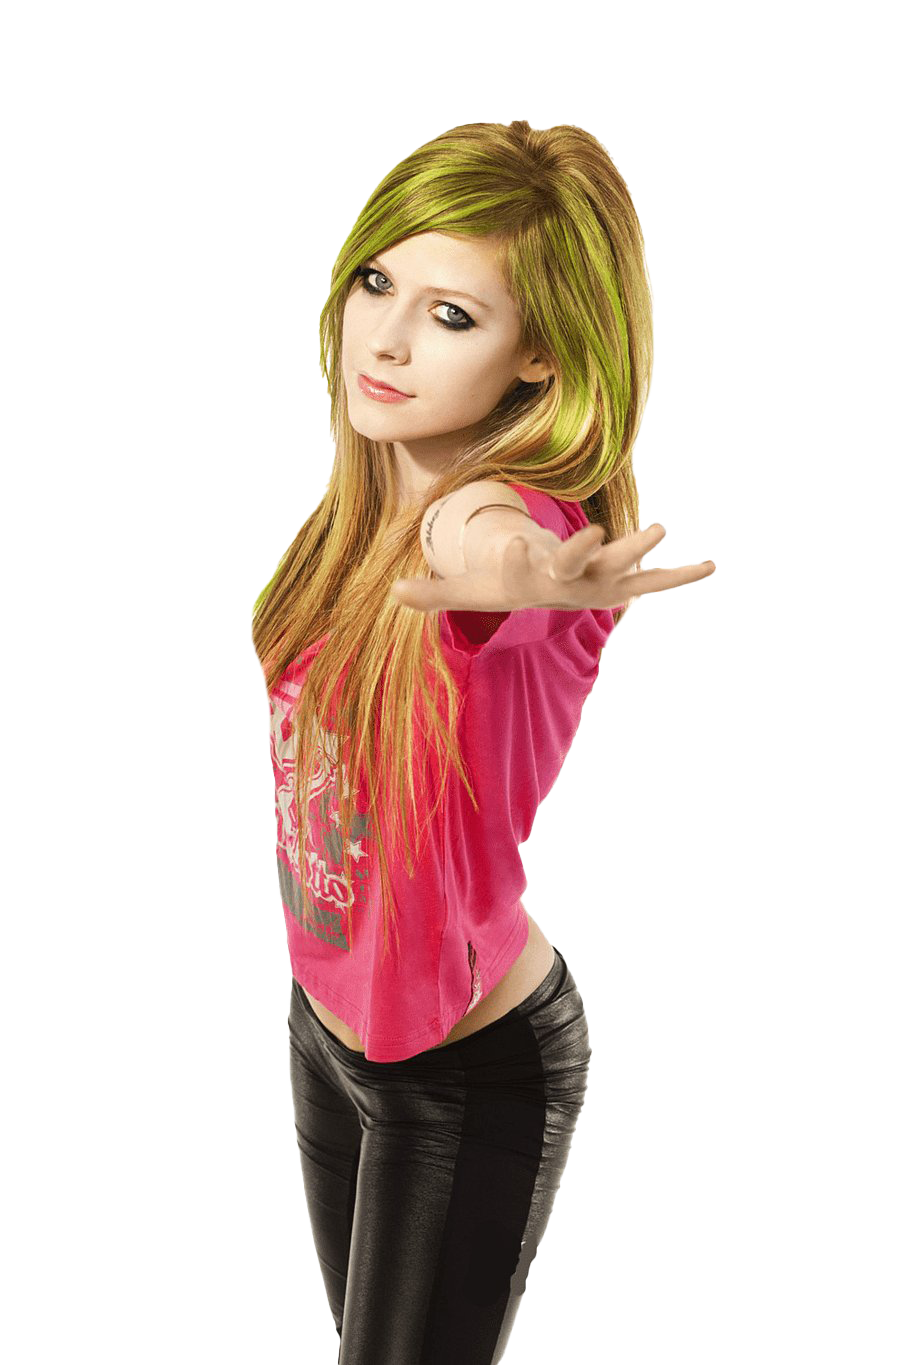 Avril Lavigne 투명합니다